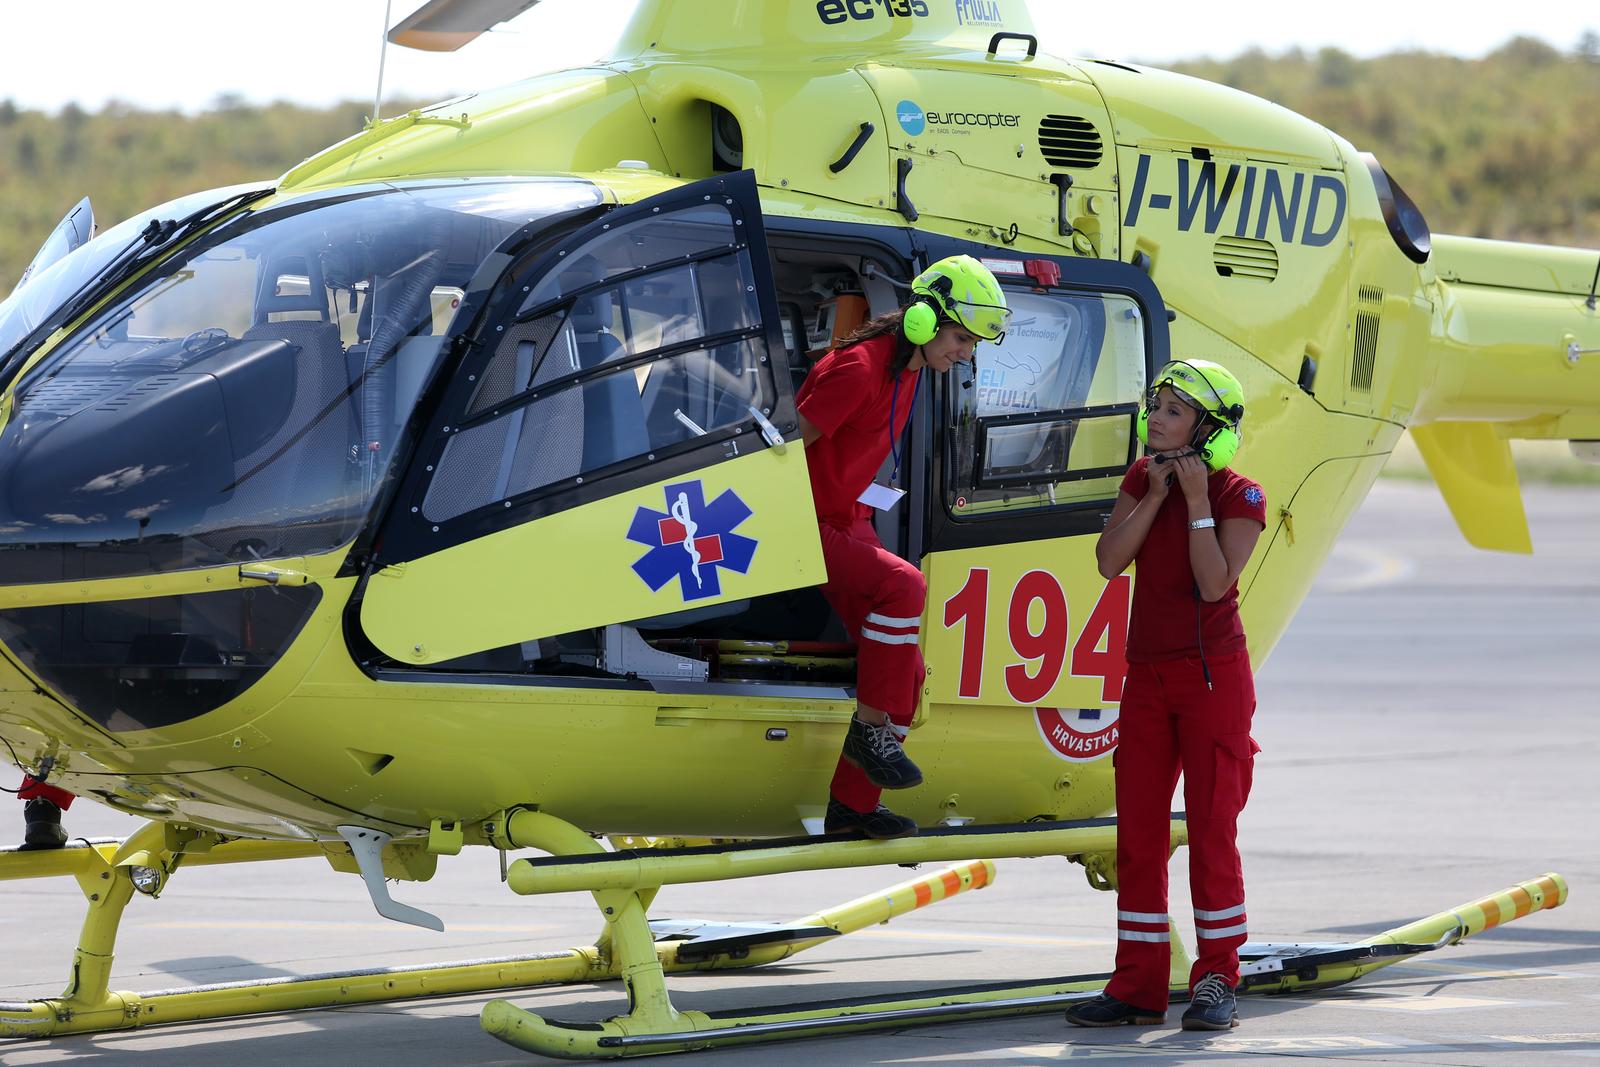 08.09.2015., Omisalj, otok Krk - Helikopterska hitna sluzba u Zracnoj luci Rijeka.r"nPhoto: Goran Kovacic/PIXSELL